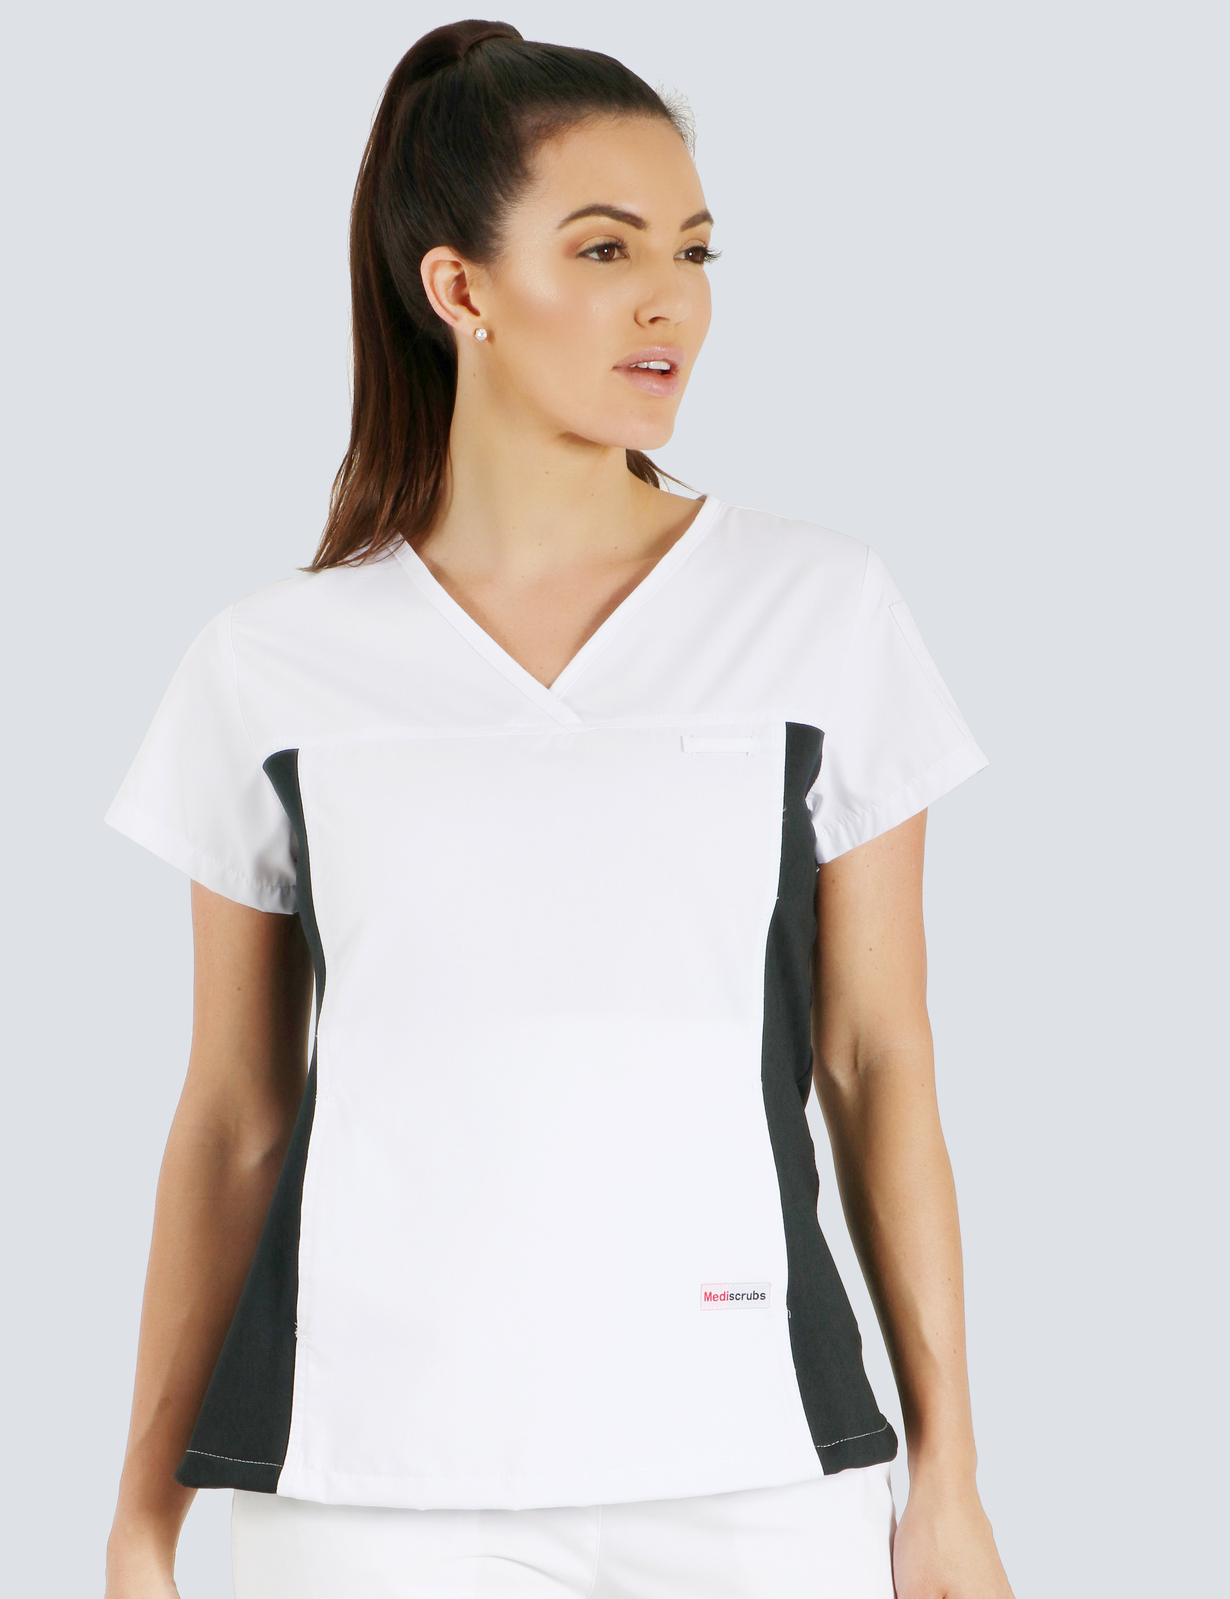 Ashmore Retreat Carer Uniform Top Only Bundle - (Women's Fit Spandex in White incl Logo) 